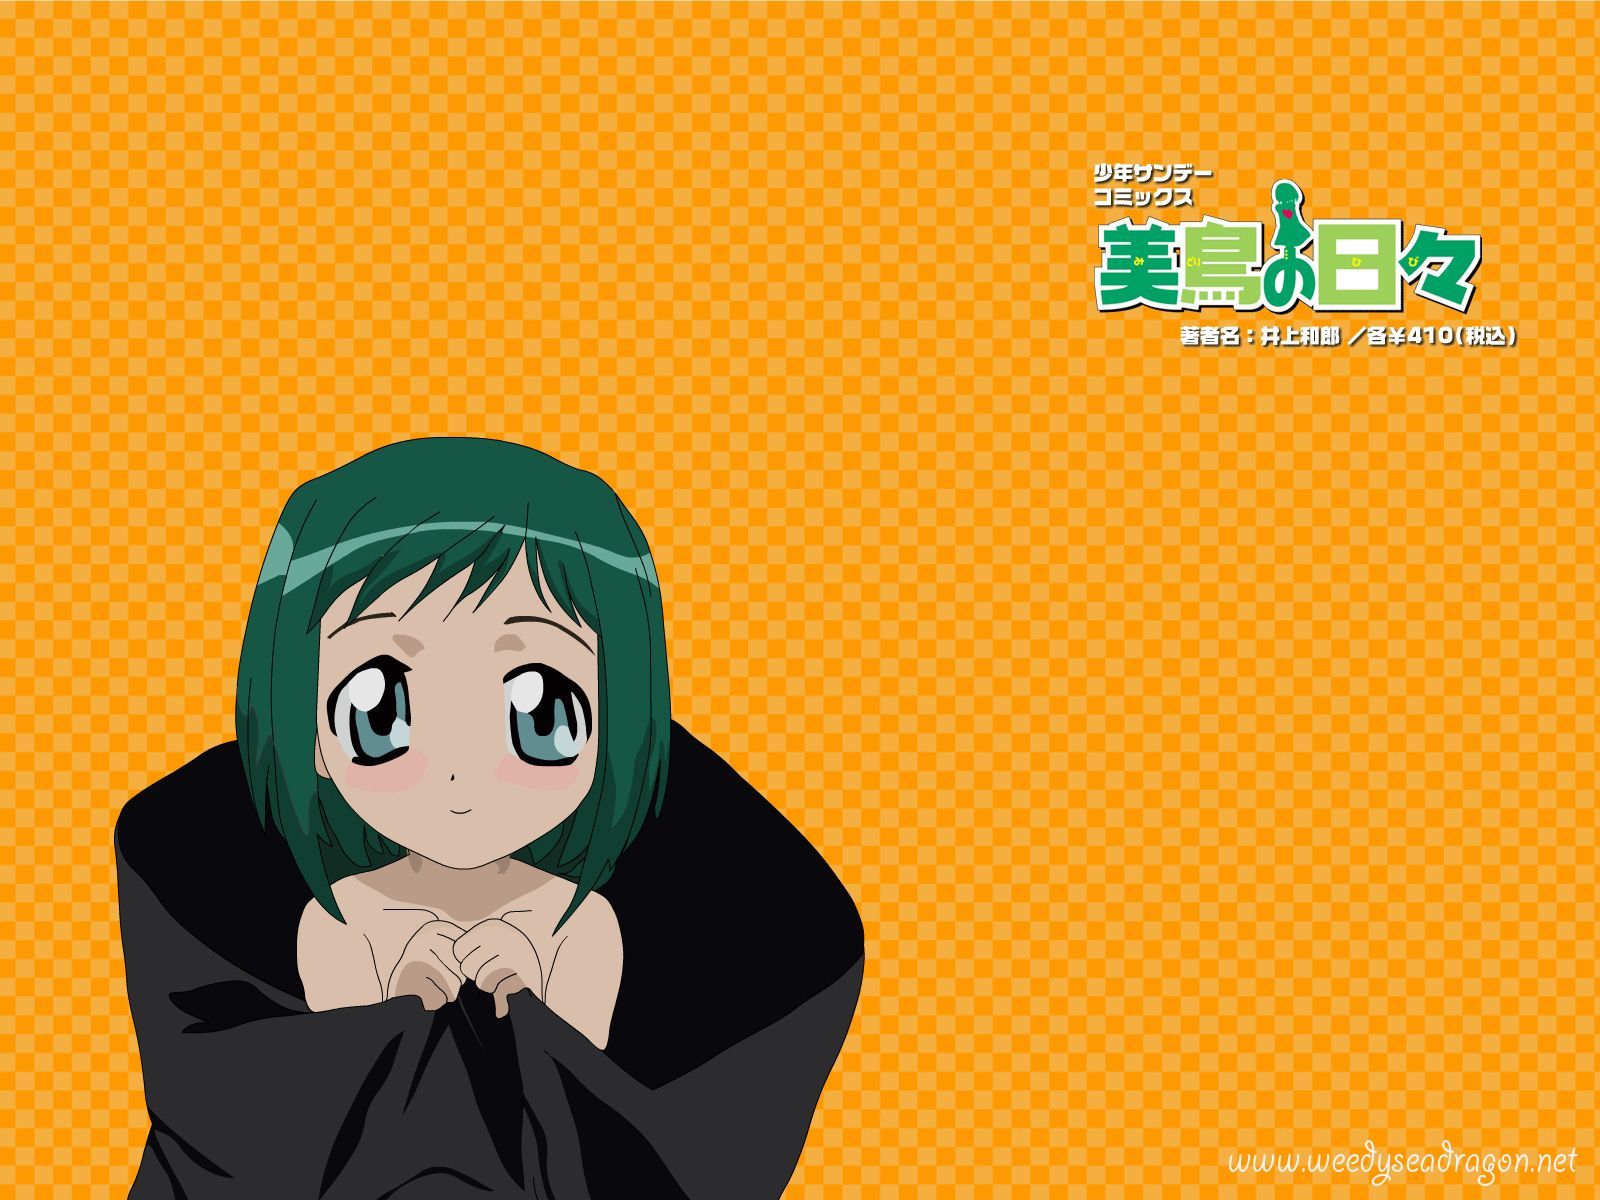 Midori no Hibi (Midori Days) Image #3419360 - Zerochan Anime Image Board